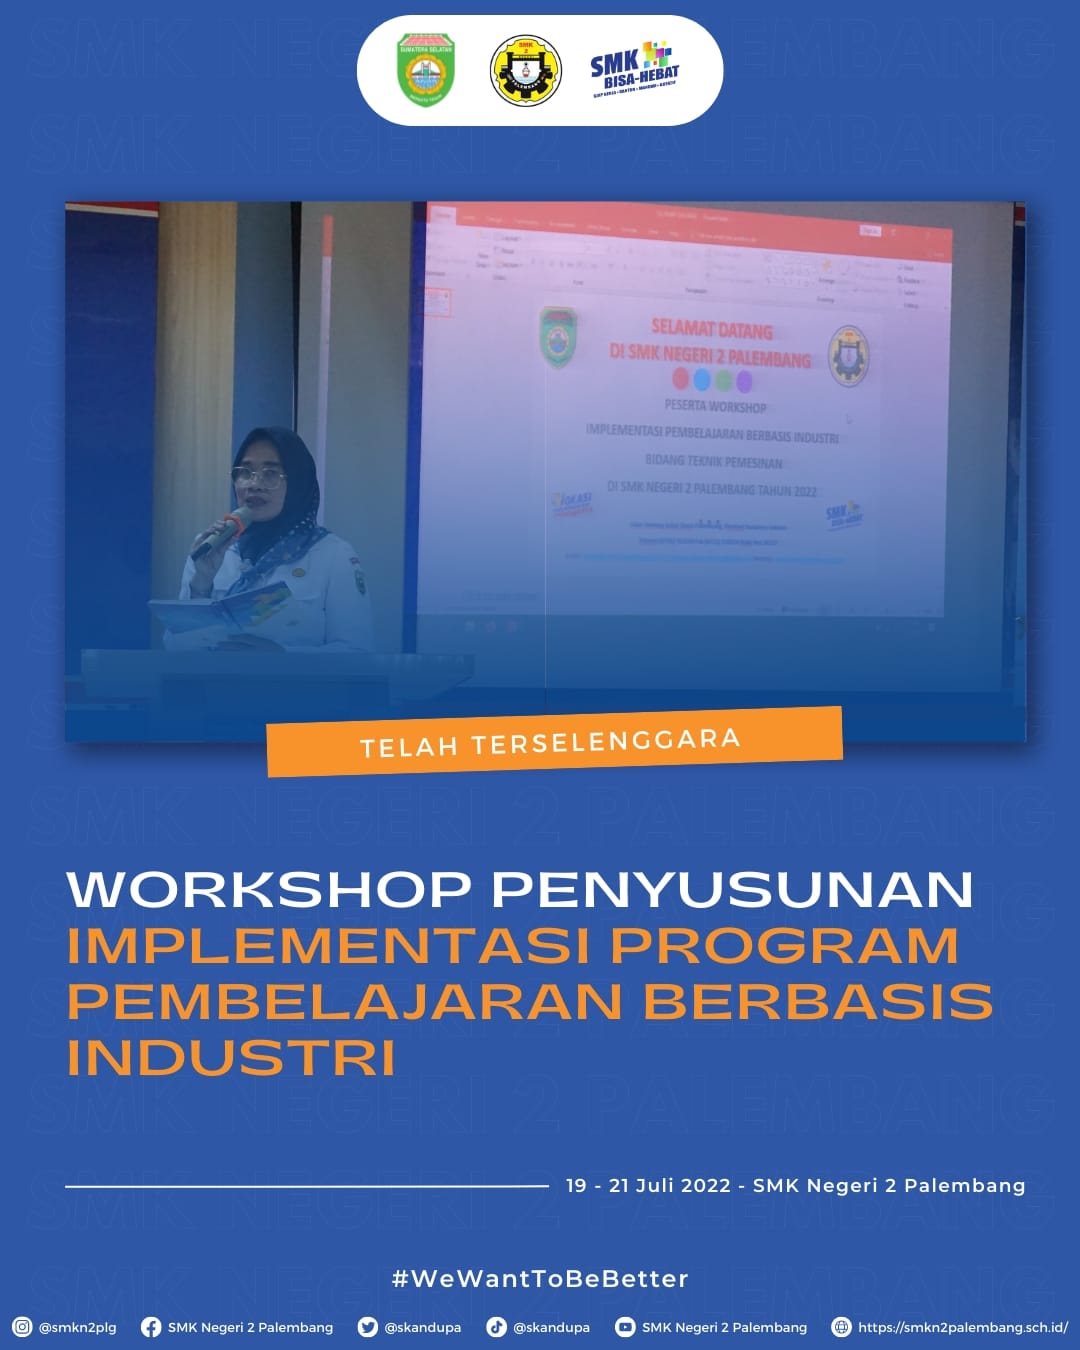 Workshop Penyusunan Implementasi Program Pembelajaran Berbasis Industri SMK Negeri 2 Palembang